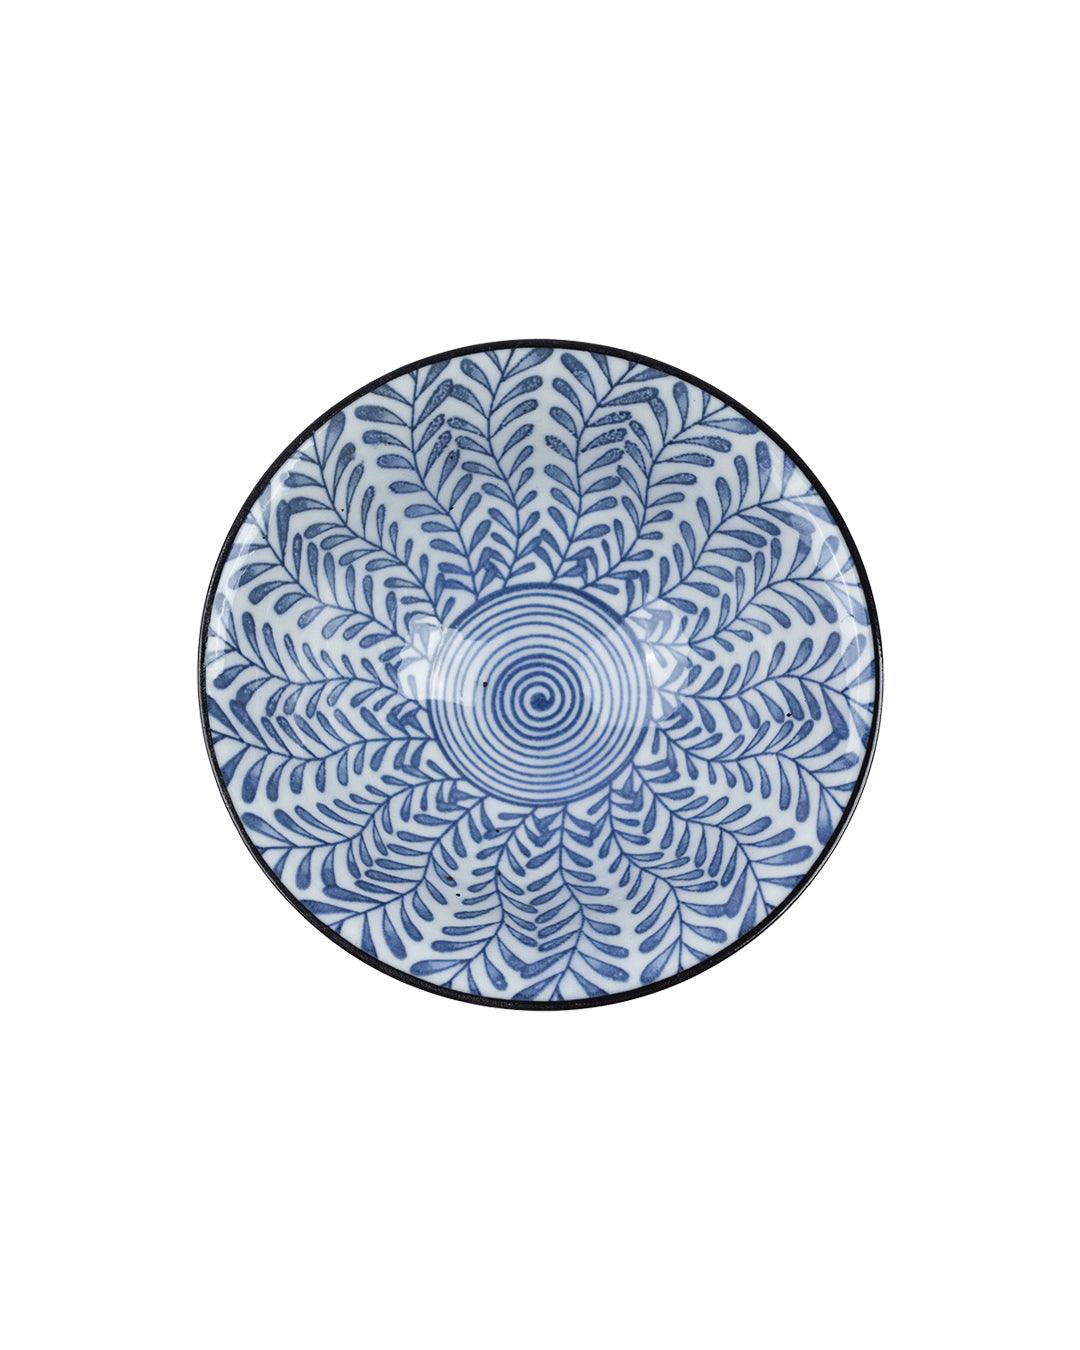 Bowl, Botanical Print, Light Blue, Ceramic - MARKET 99